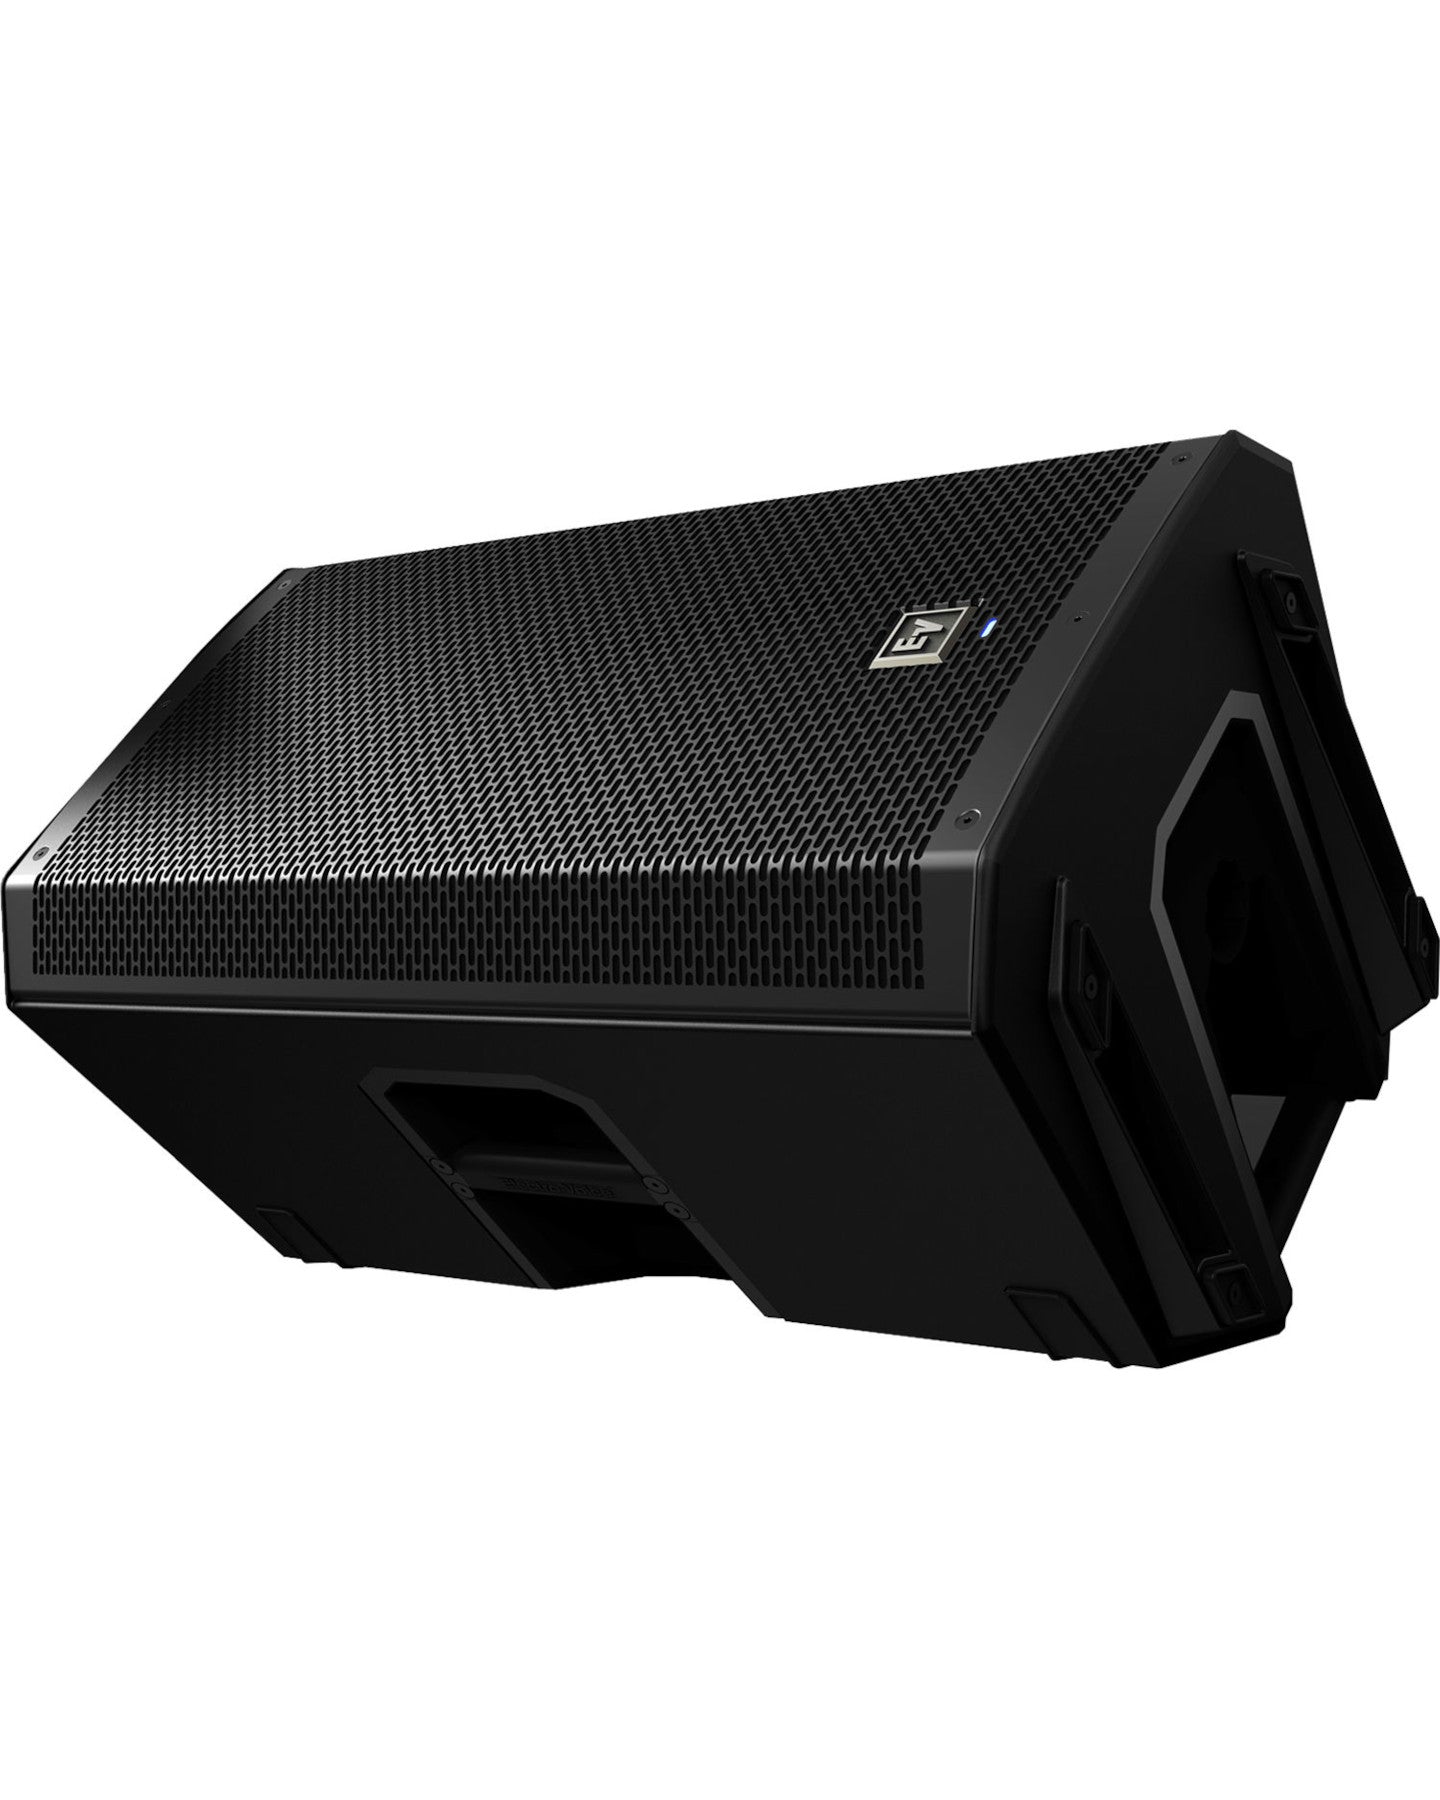 ZLX-15BT 1000W 15 inch Powered Speaker with Bluetooth